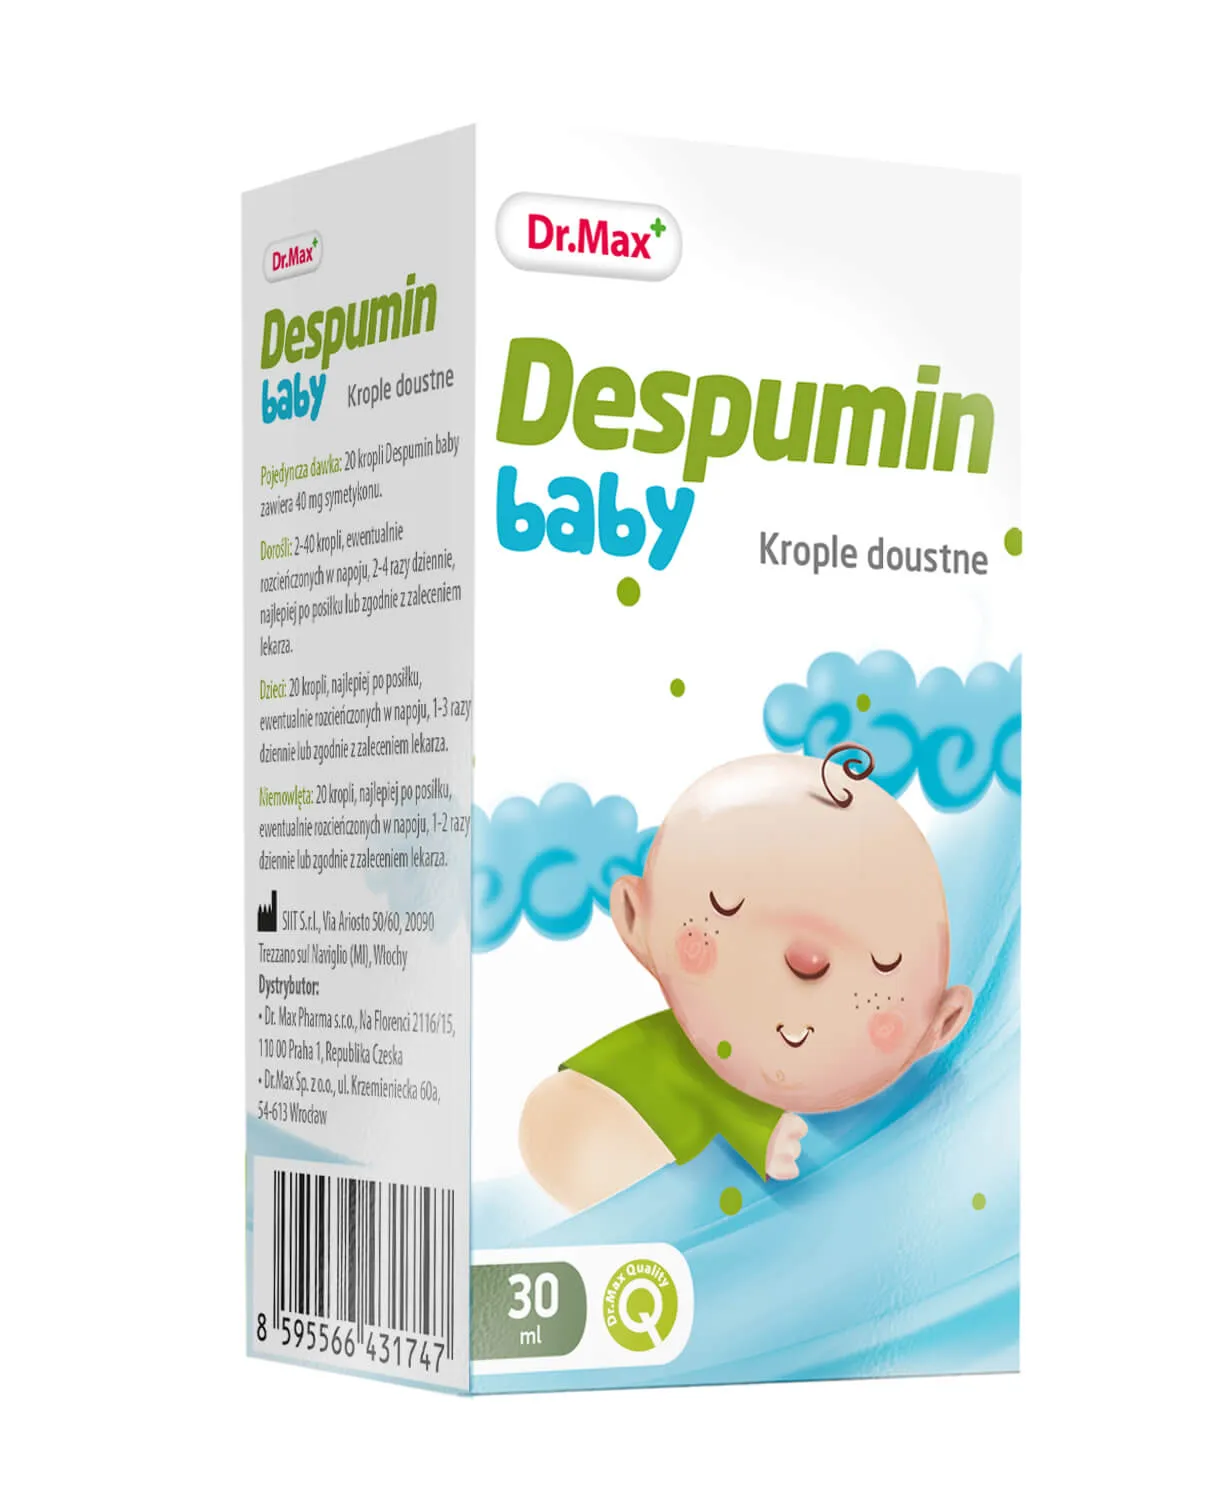 Despumin Baby Dr.Max, krople doustne, 30ml